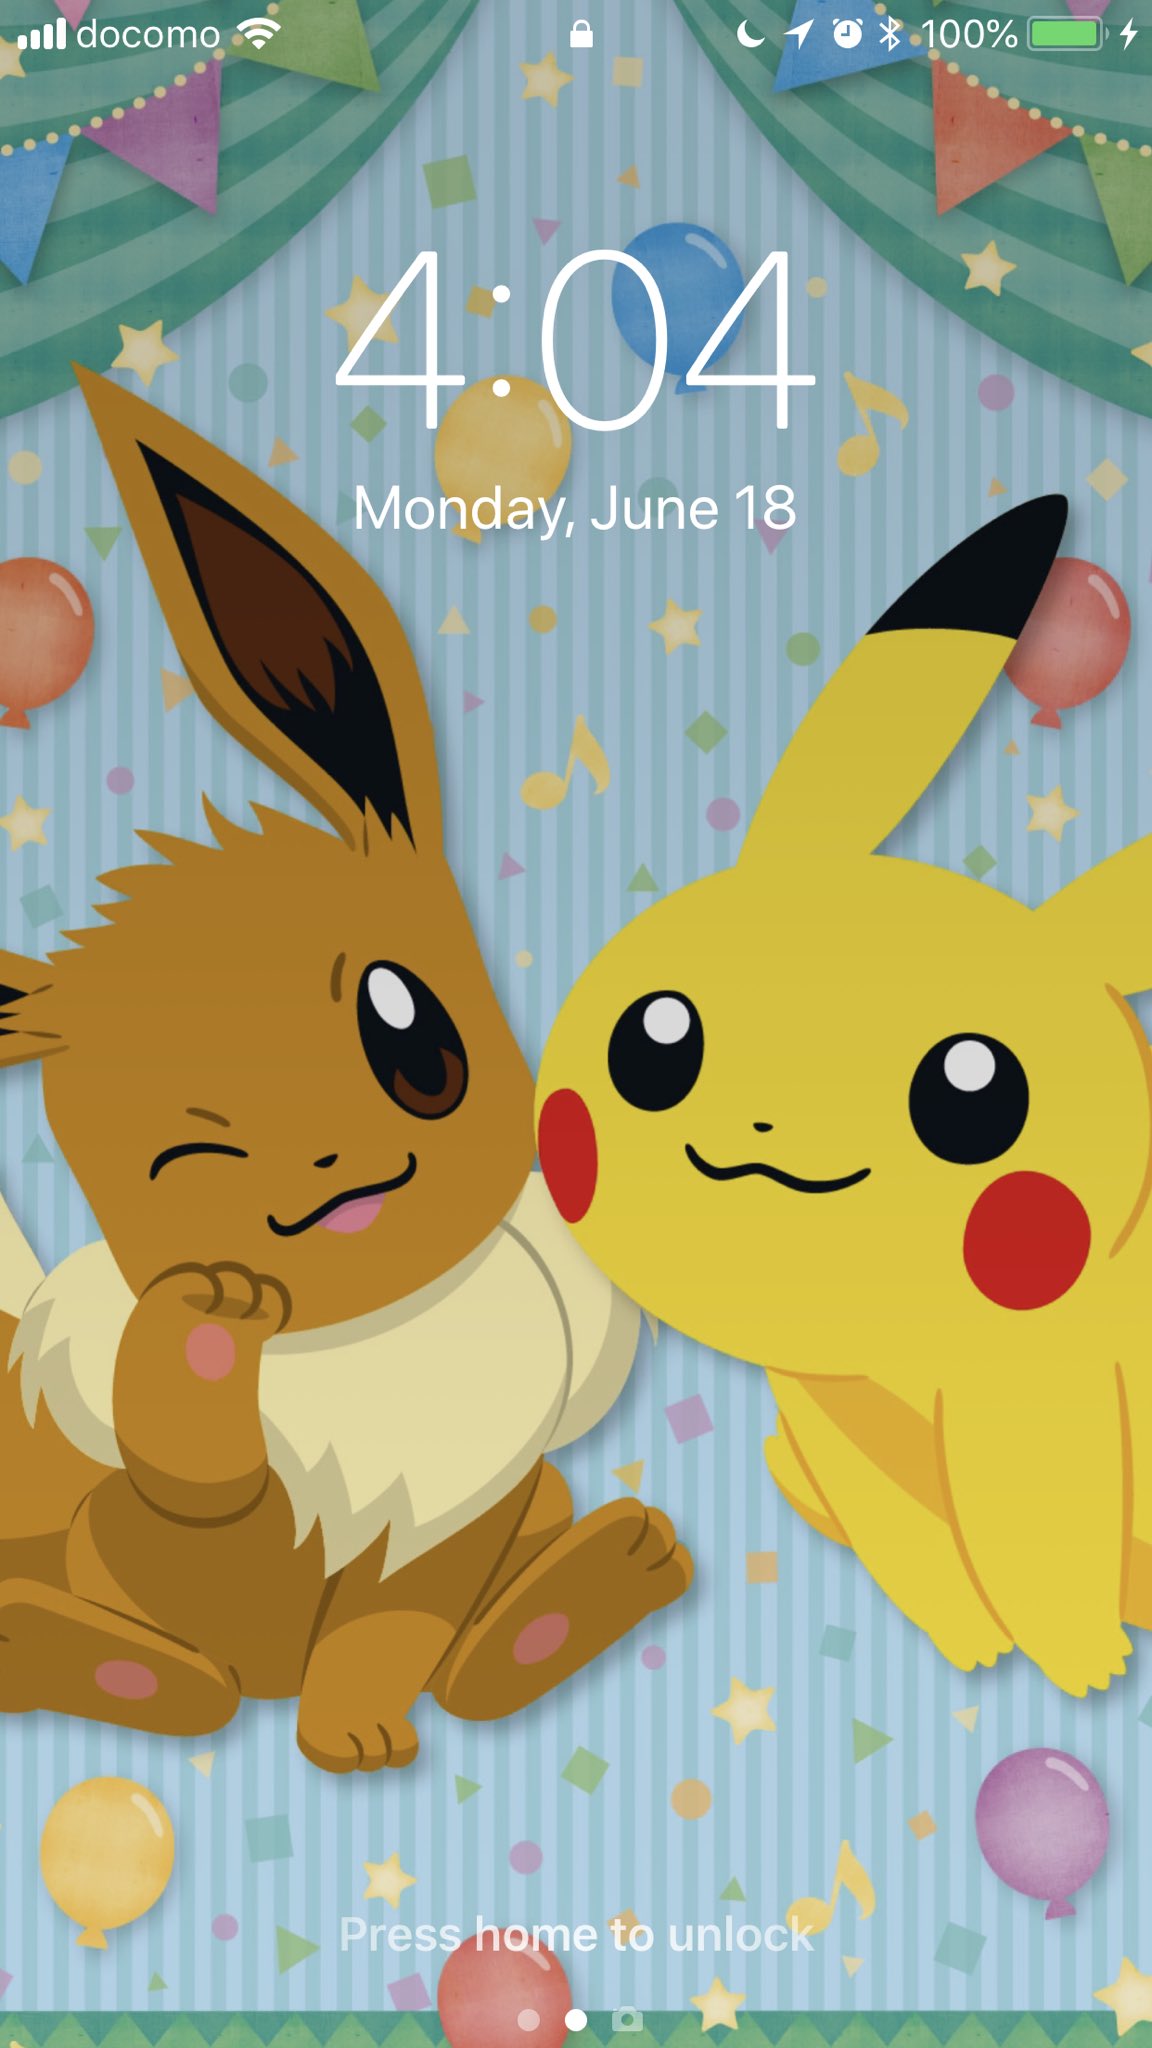 Yozon 在 Twitter 上 ロック画面の壁紙を新しくしました イーブイとピカチュウ が超可愛いぃ めちゃくちゃ気に入りました Pokemonletsgo ポケモン Nintendo Pokemon T Co 9eyxdrtoj6 Twitter